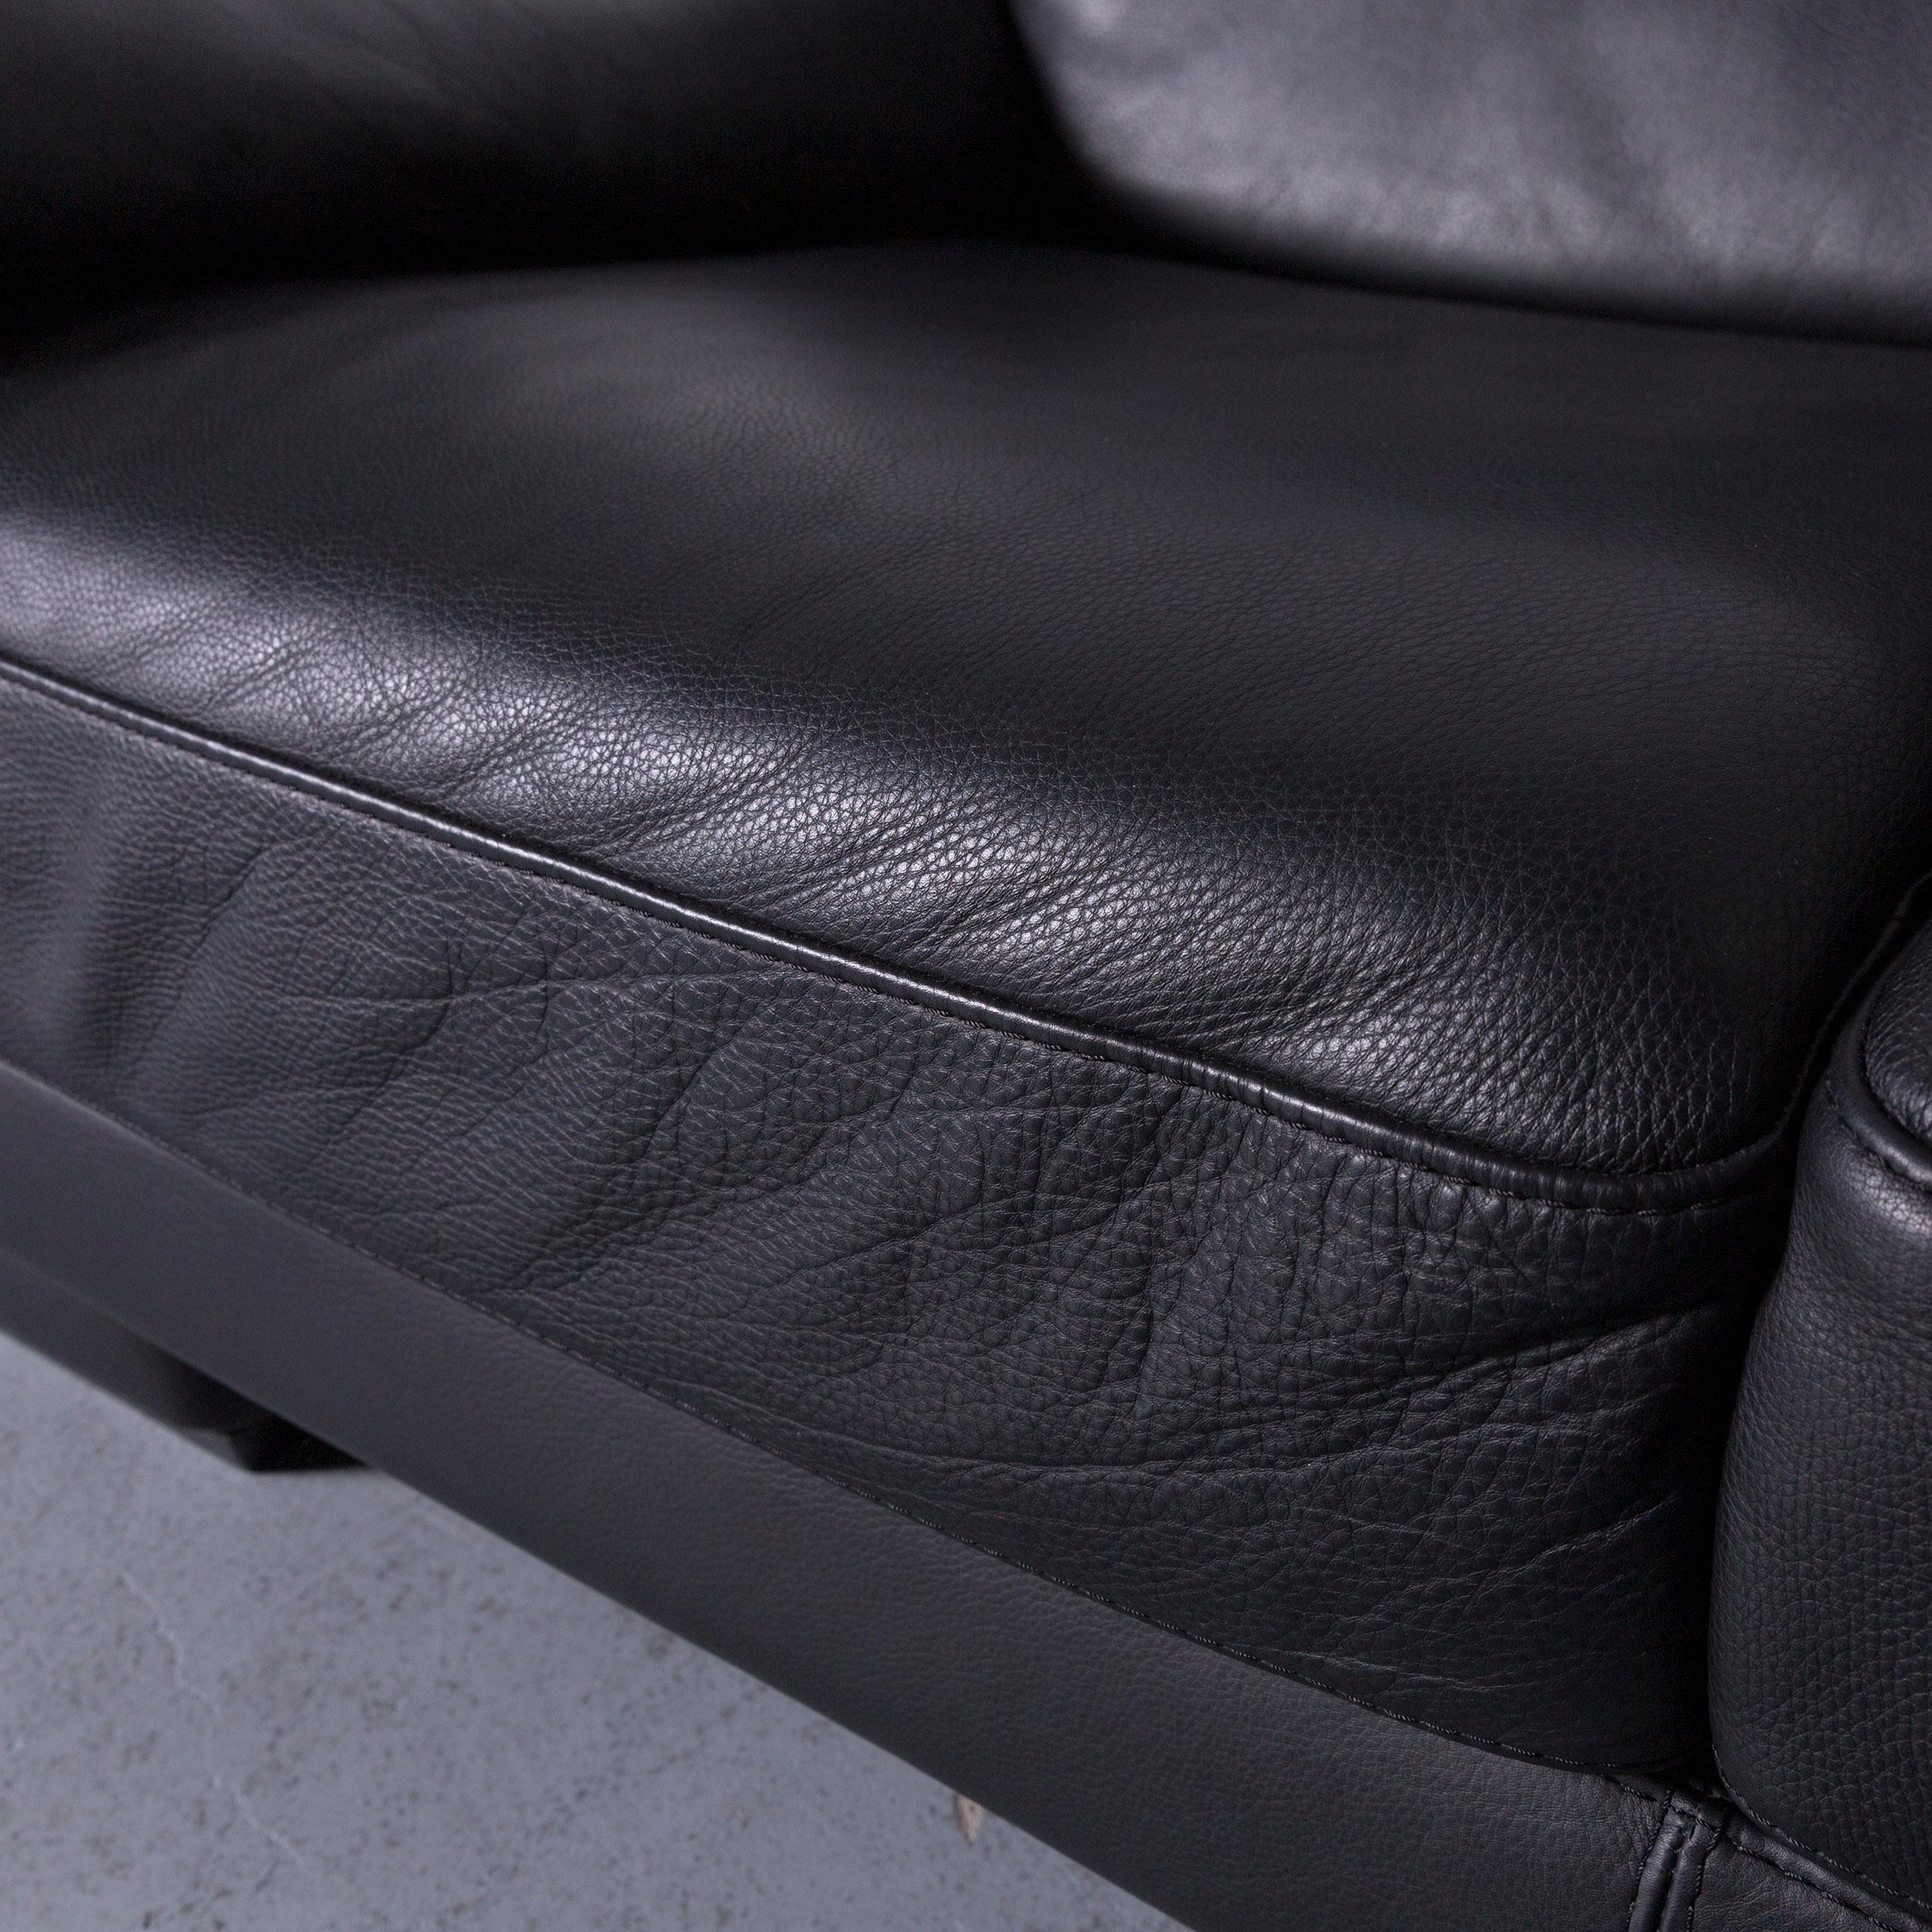 Natuzzi Designer Leather Three-Seat Sofa Couch in Black 1